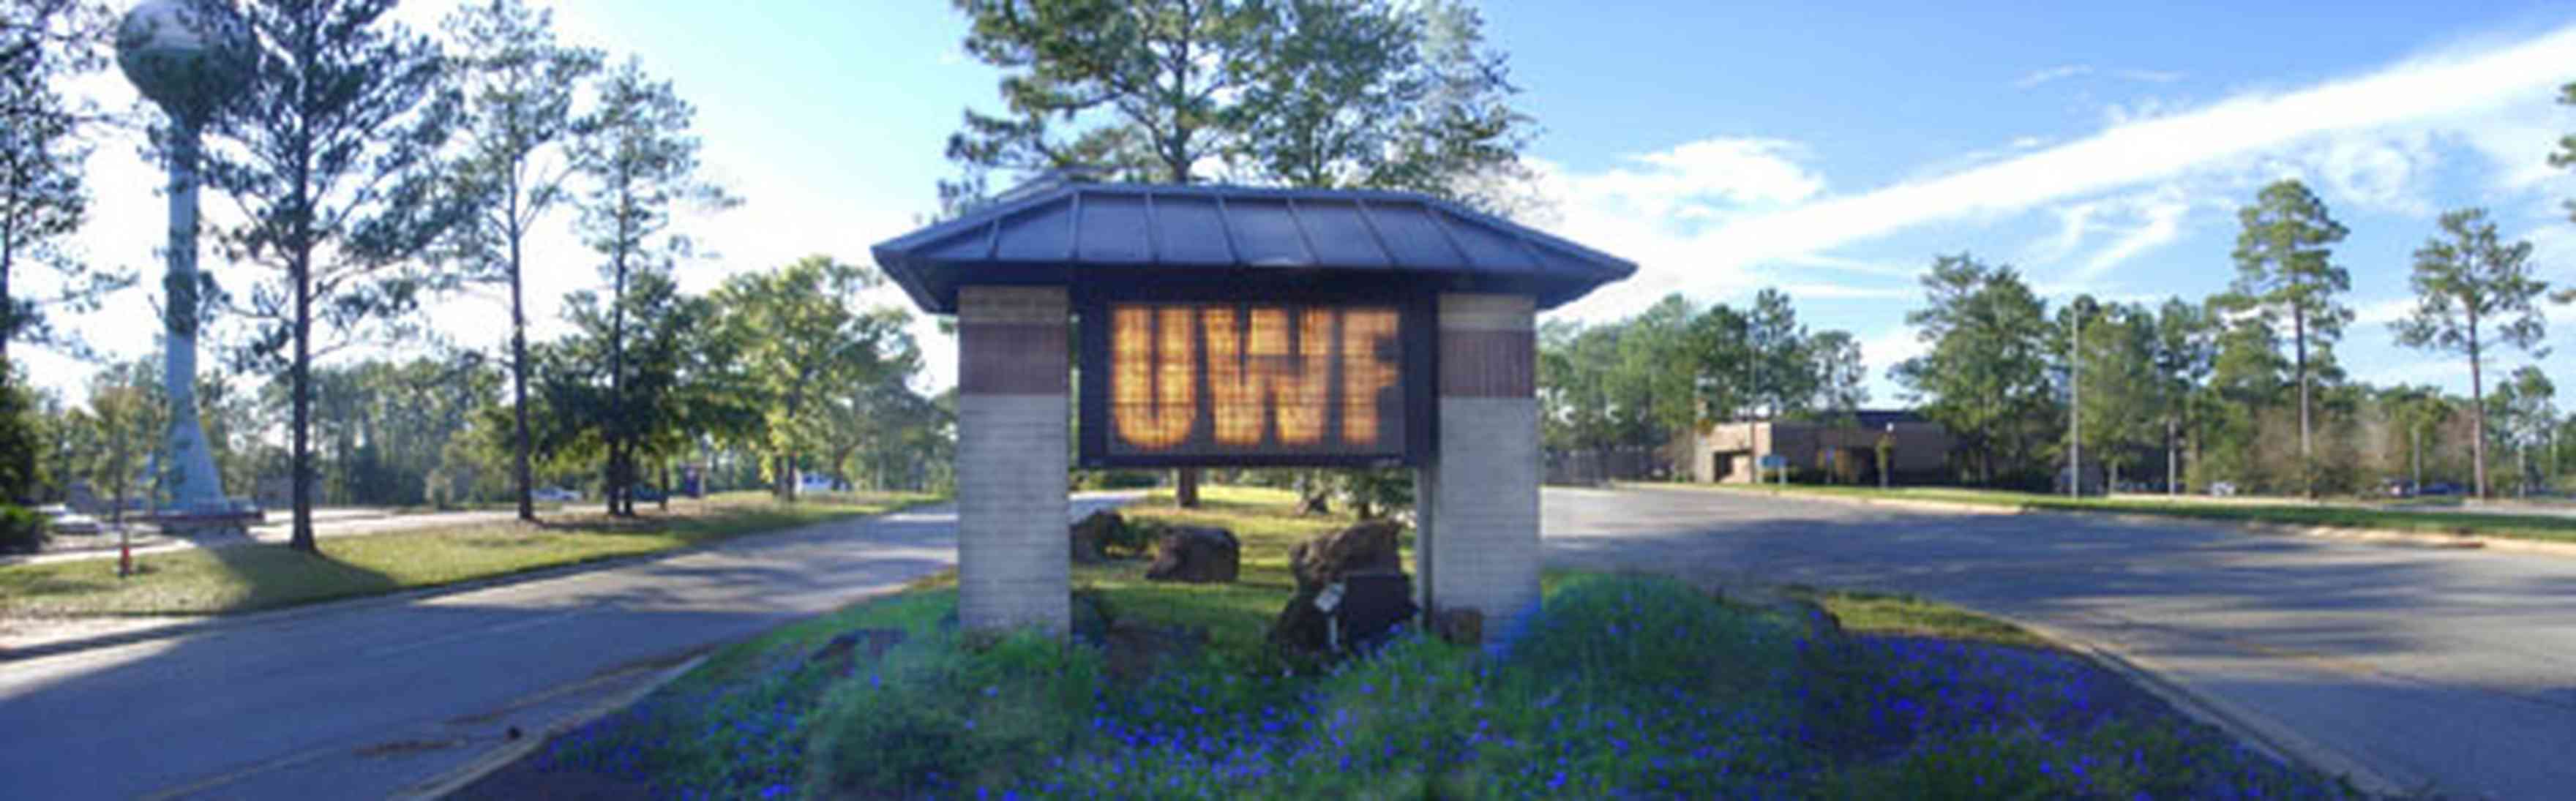 University-Of-West-Florida:-Campus_33.jpg:  university, sign, drive, pine trees